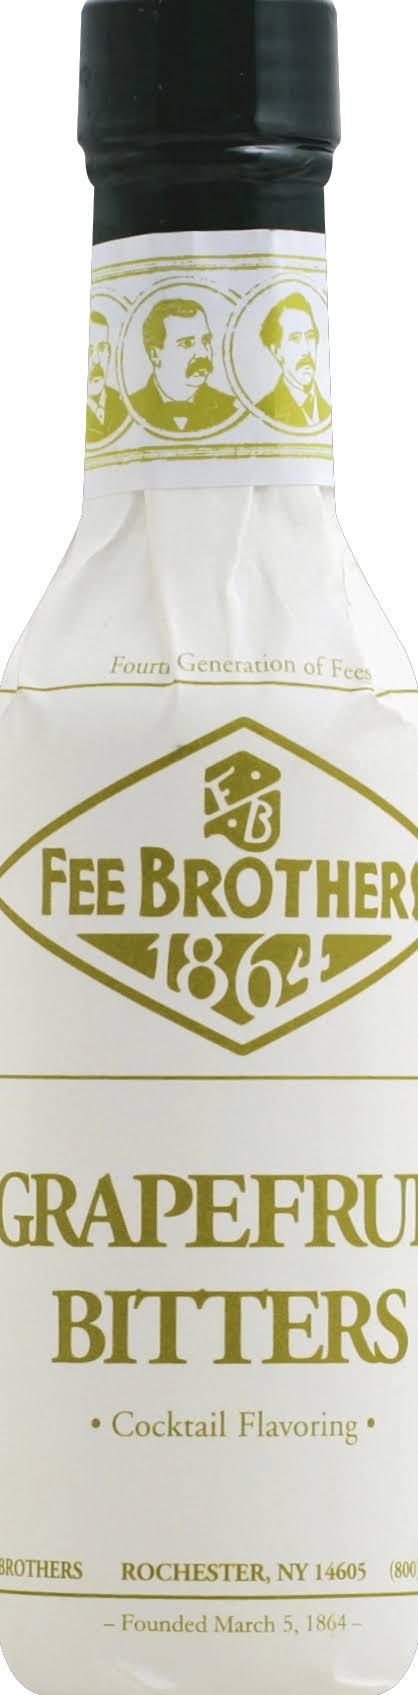 Fee Brothers Grapefruit Bitters - 5 fl oz bottle